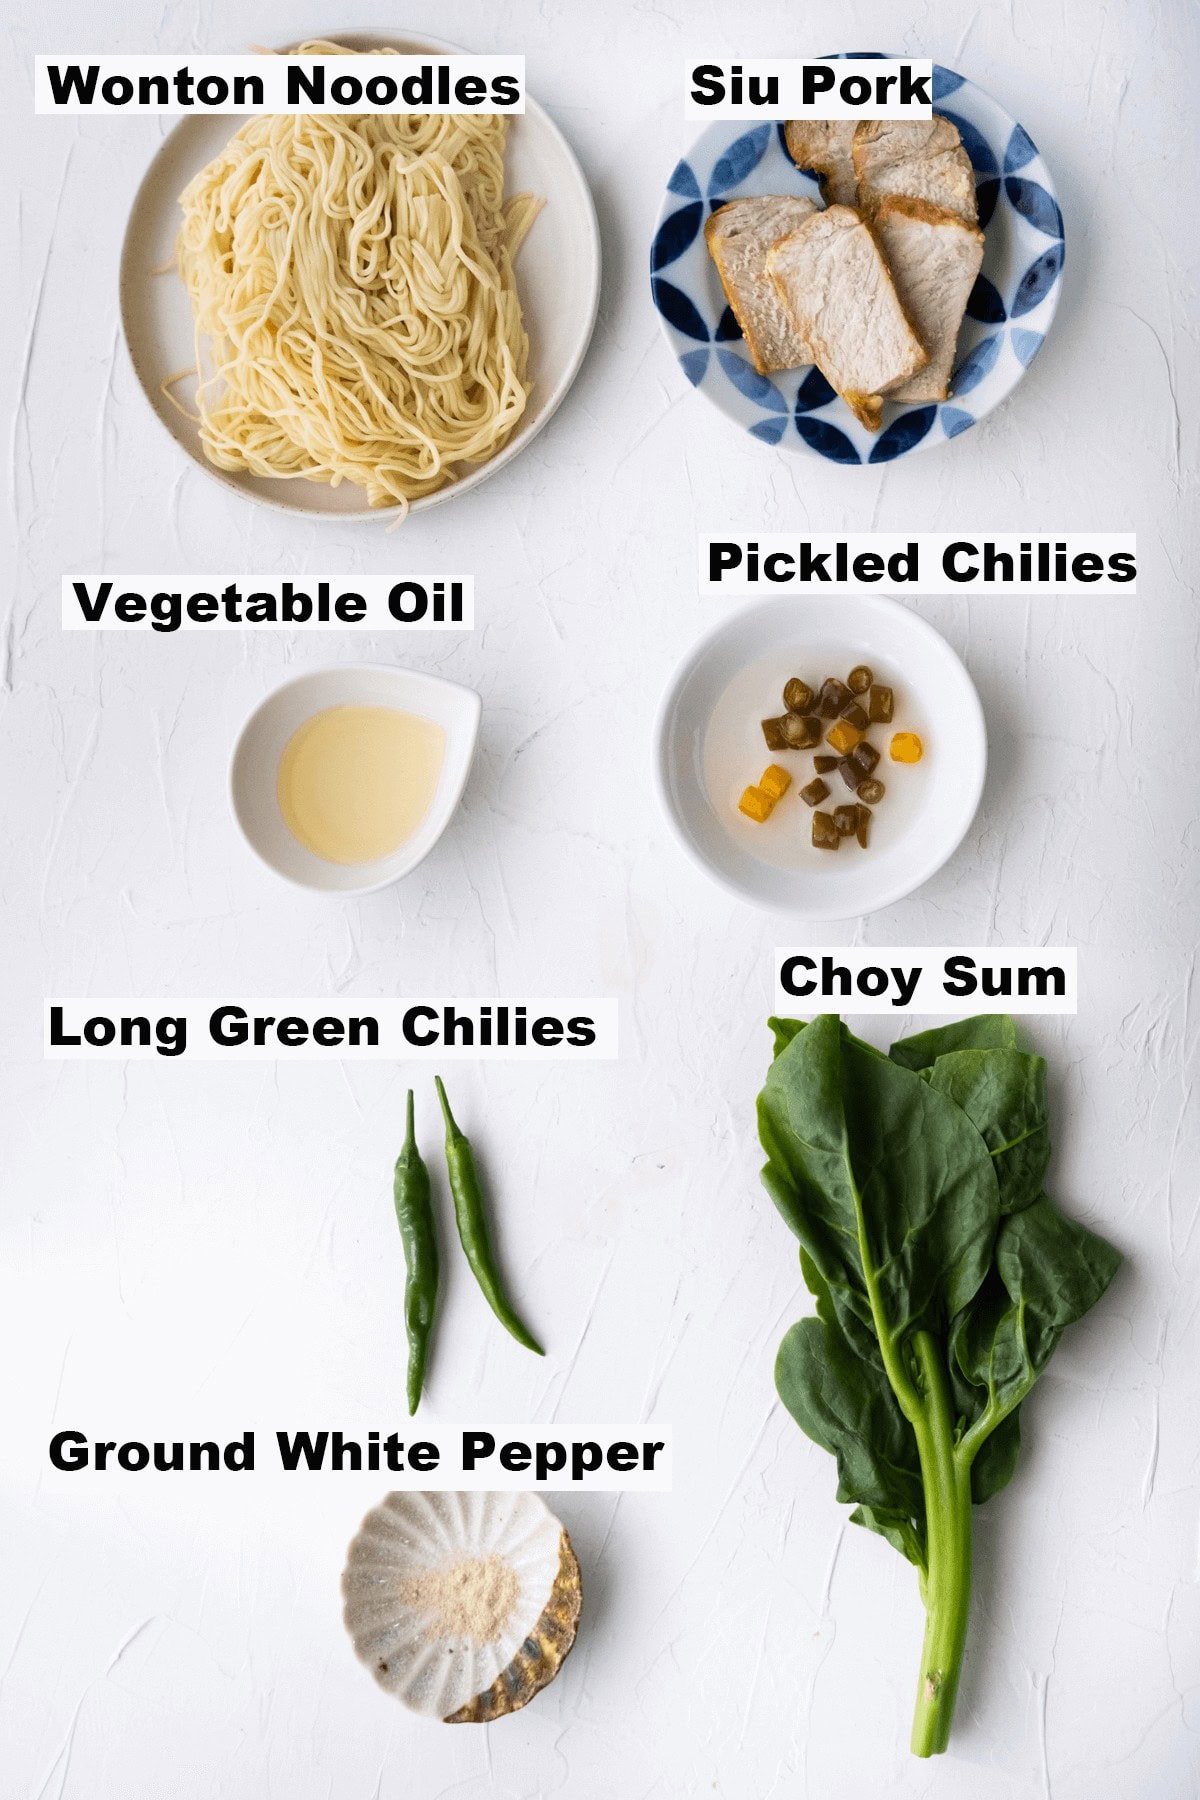 Ingredients for wonton noodles. 